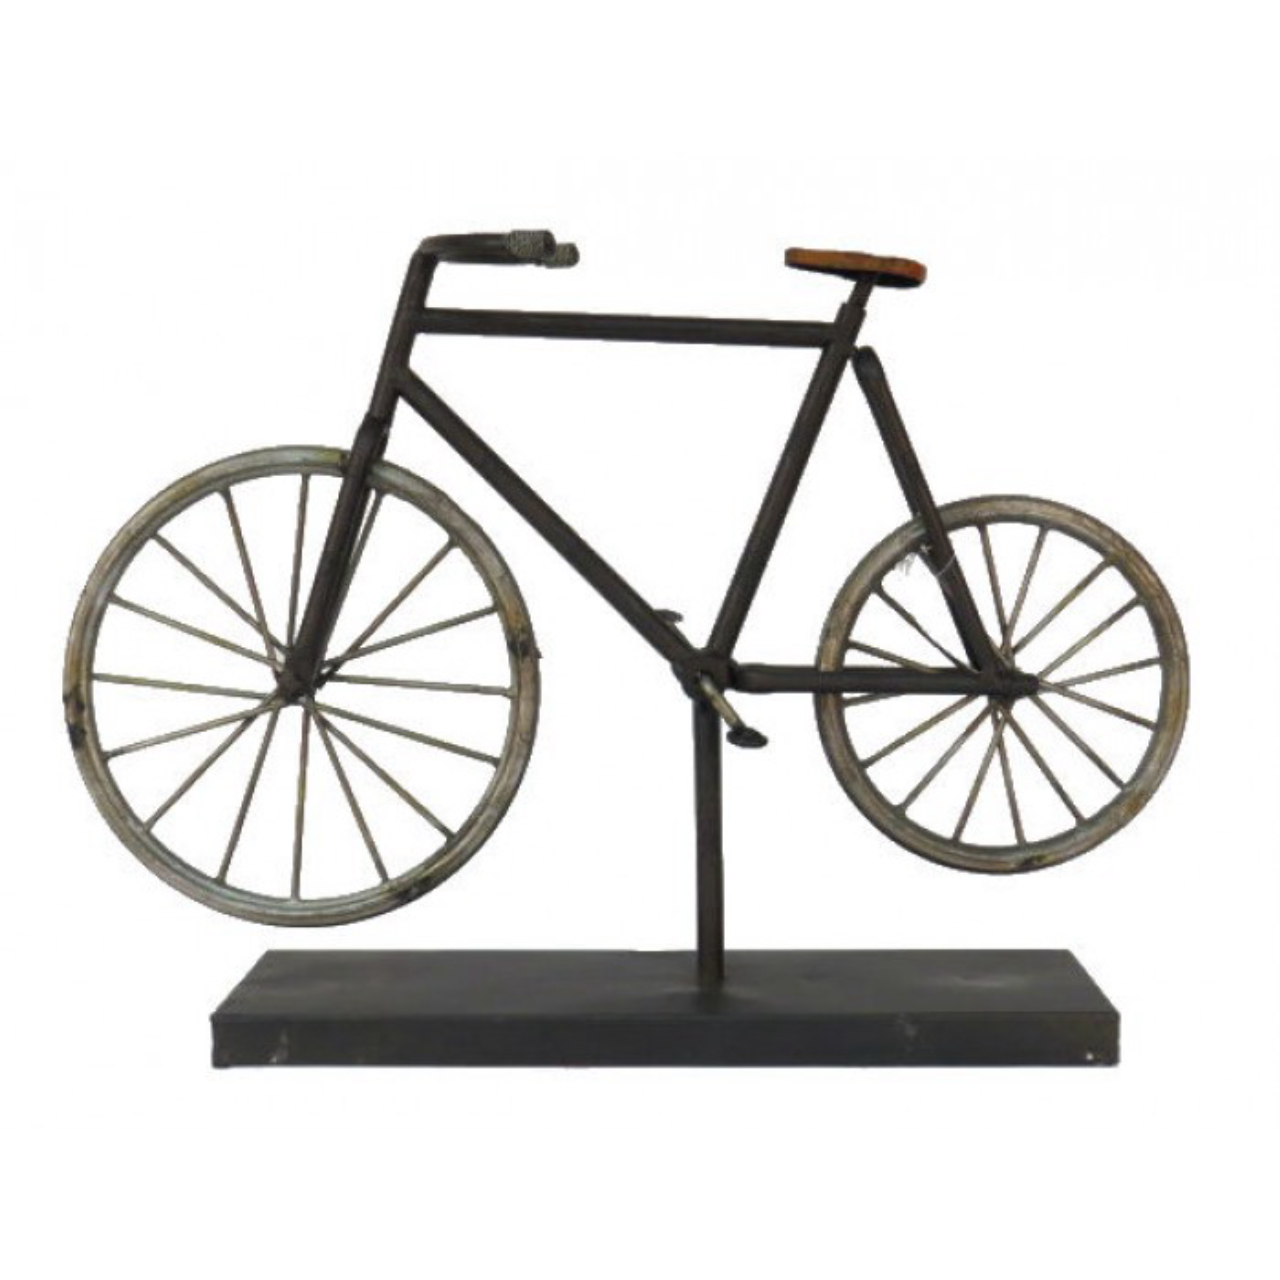 Adorno de metal, bicicleta retrô. Da Piccola Brotto, R$ 201,60.